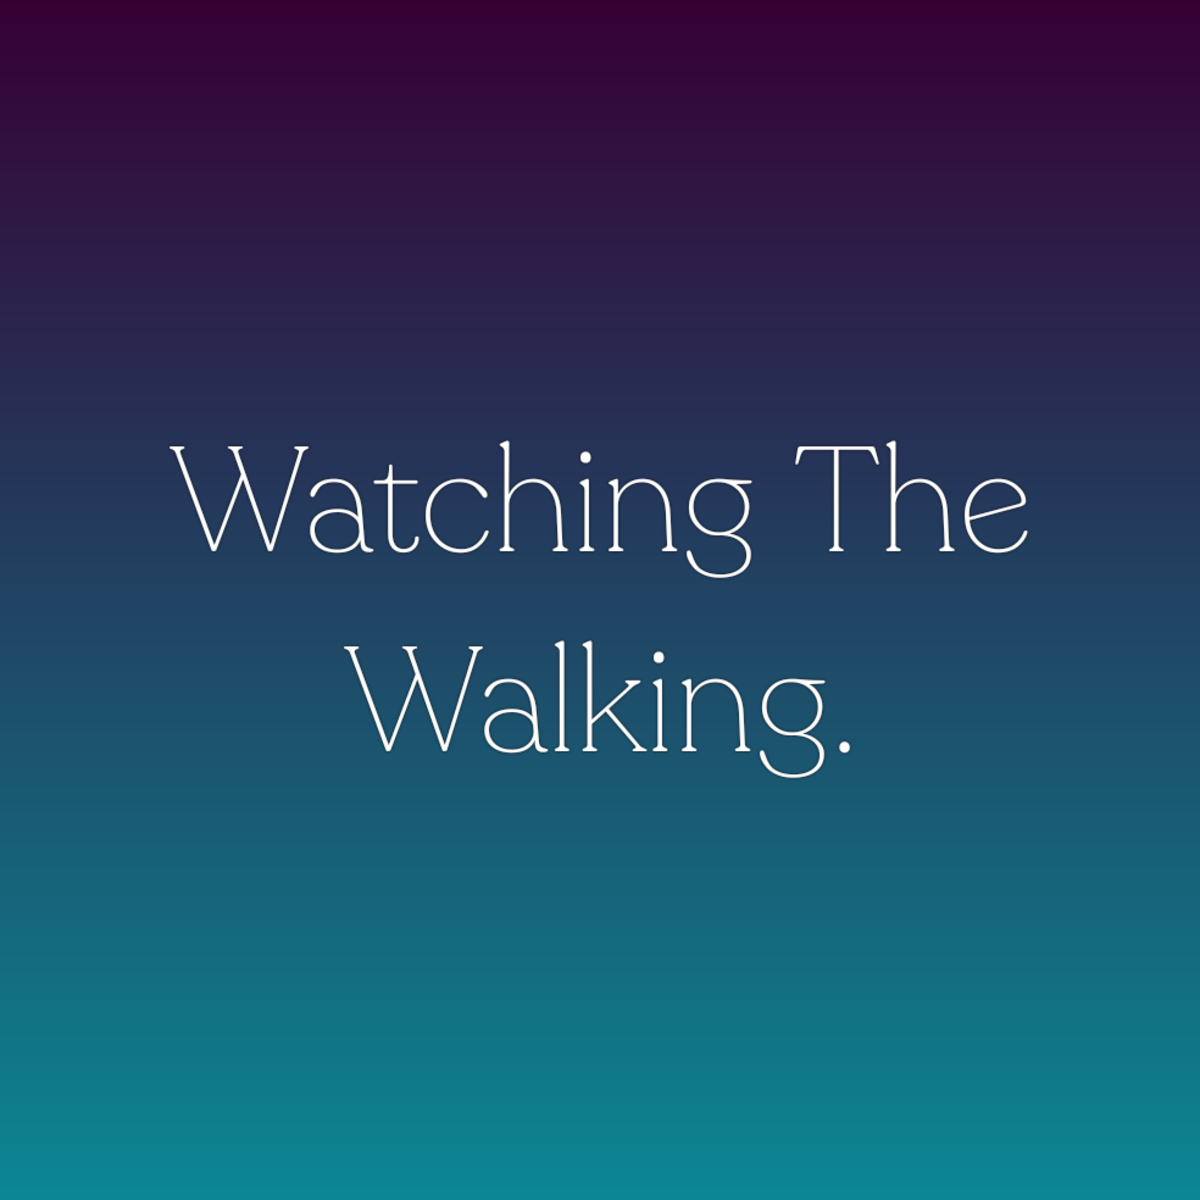 Watching The Walking.